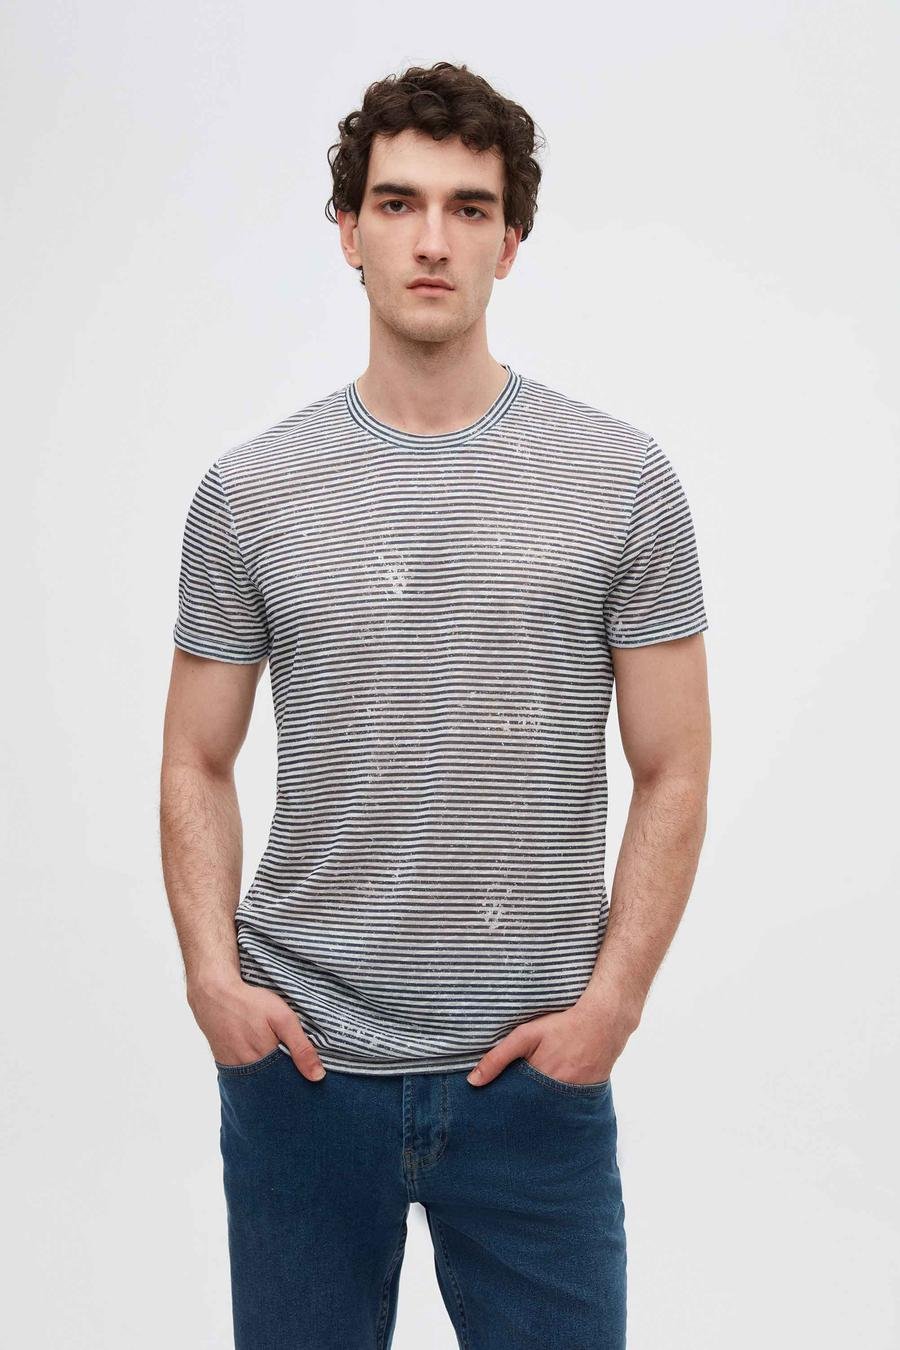 Twn Slim Fit Lacivert Çizgi Baskılı T-Shirt - 8683925125250 | D'S Damat